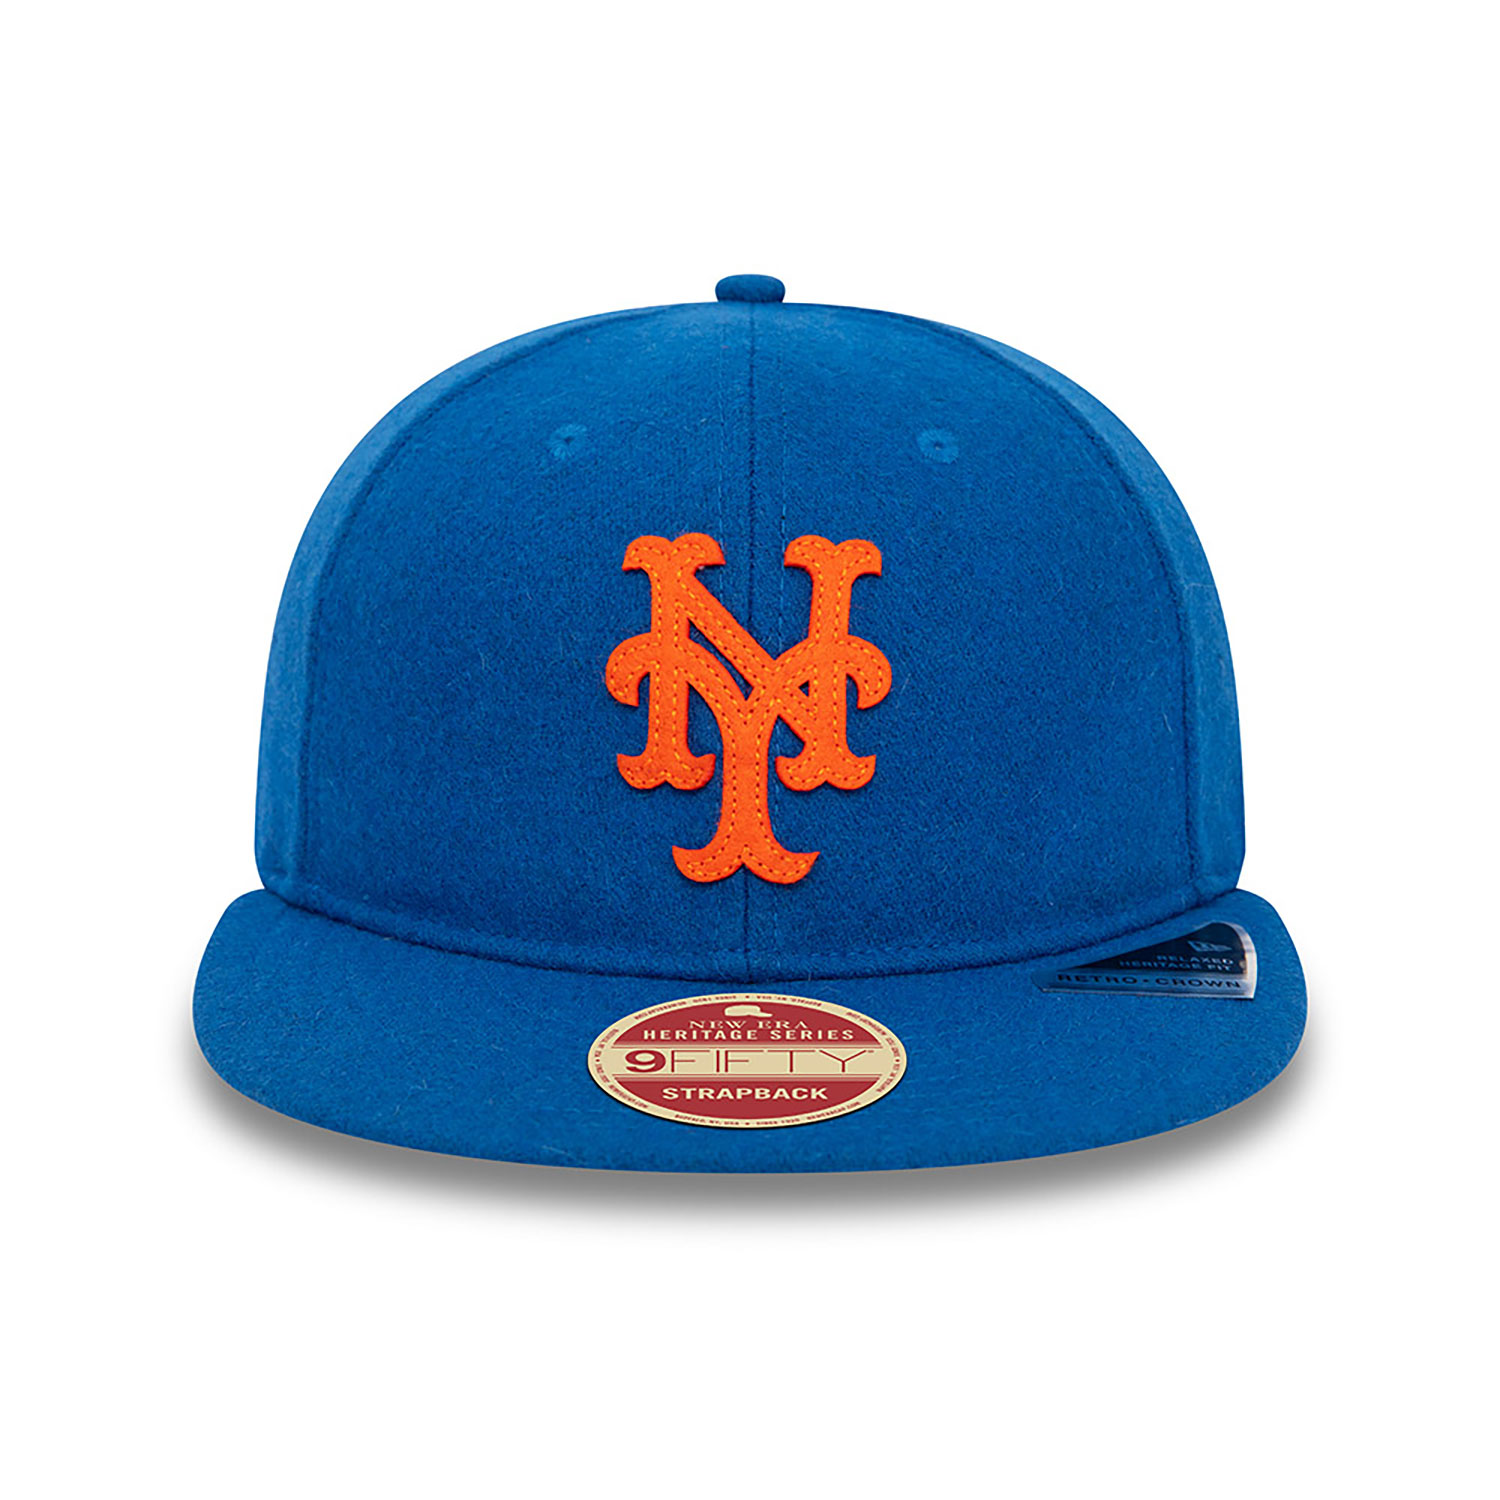 New York Mets Heritage Series Blue Retro Crown 9FIFTY Strapback Cap